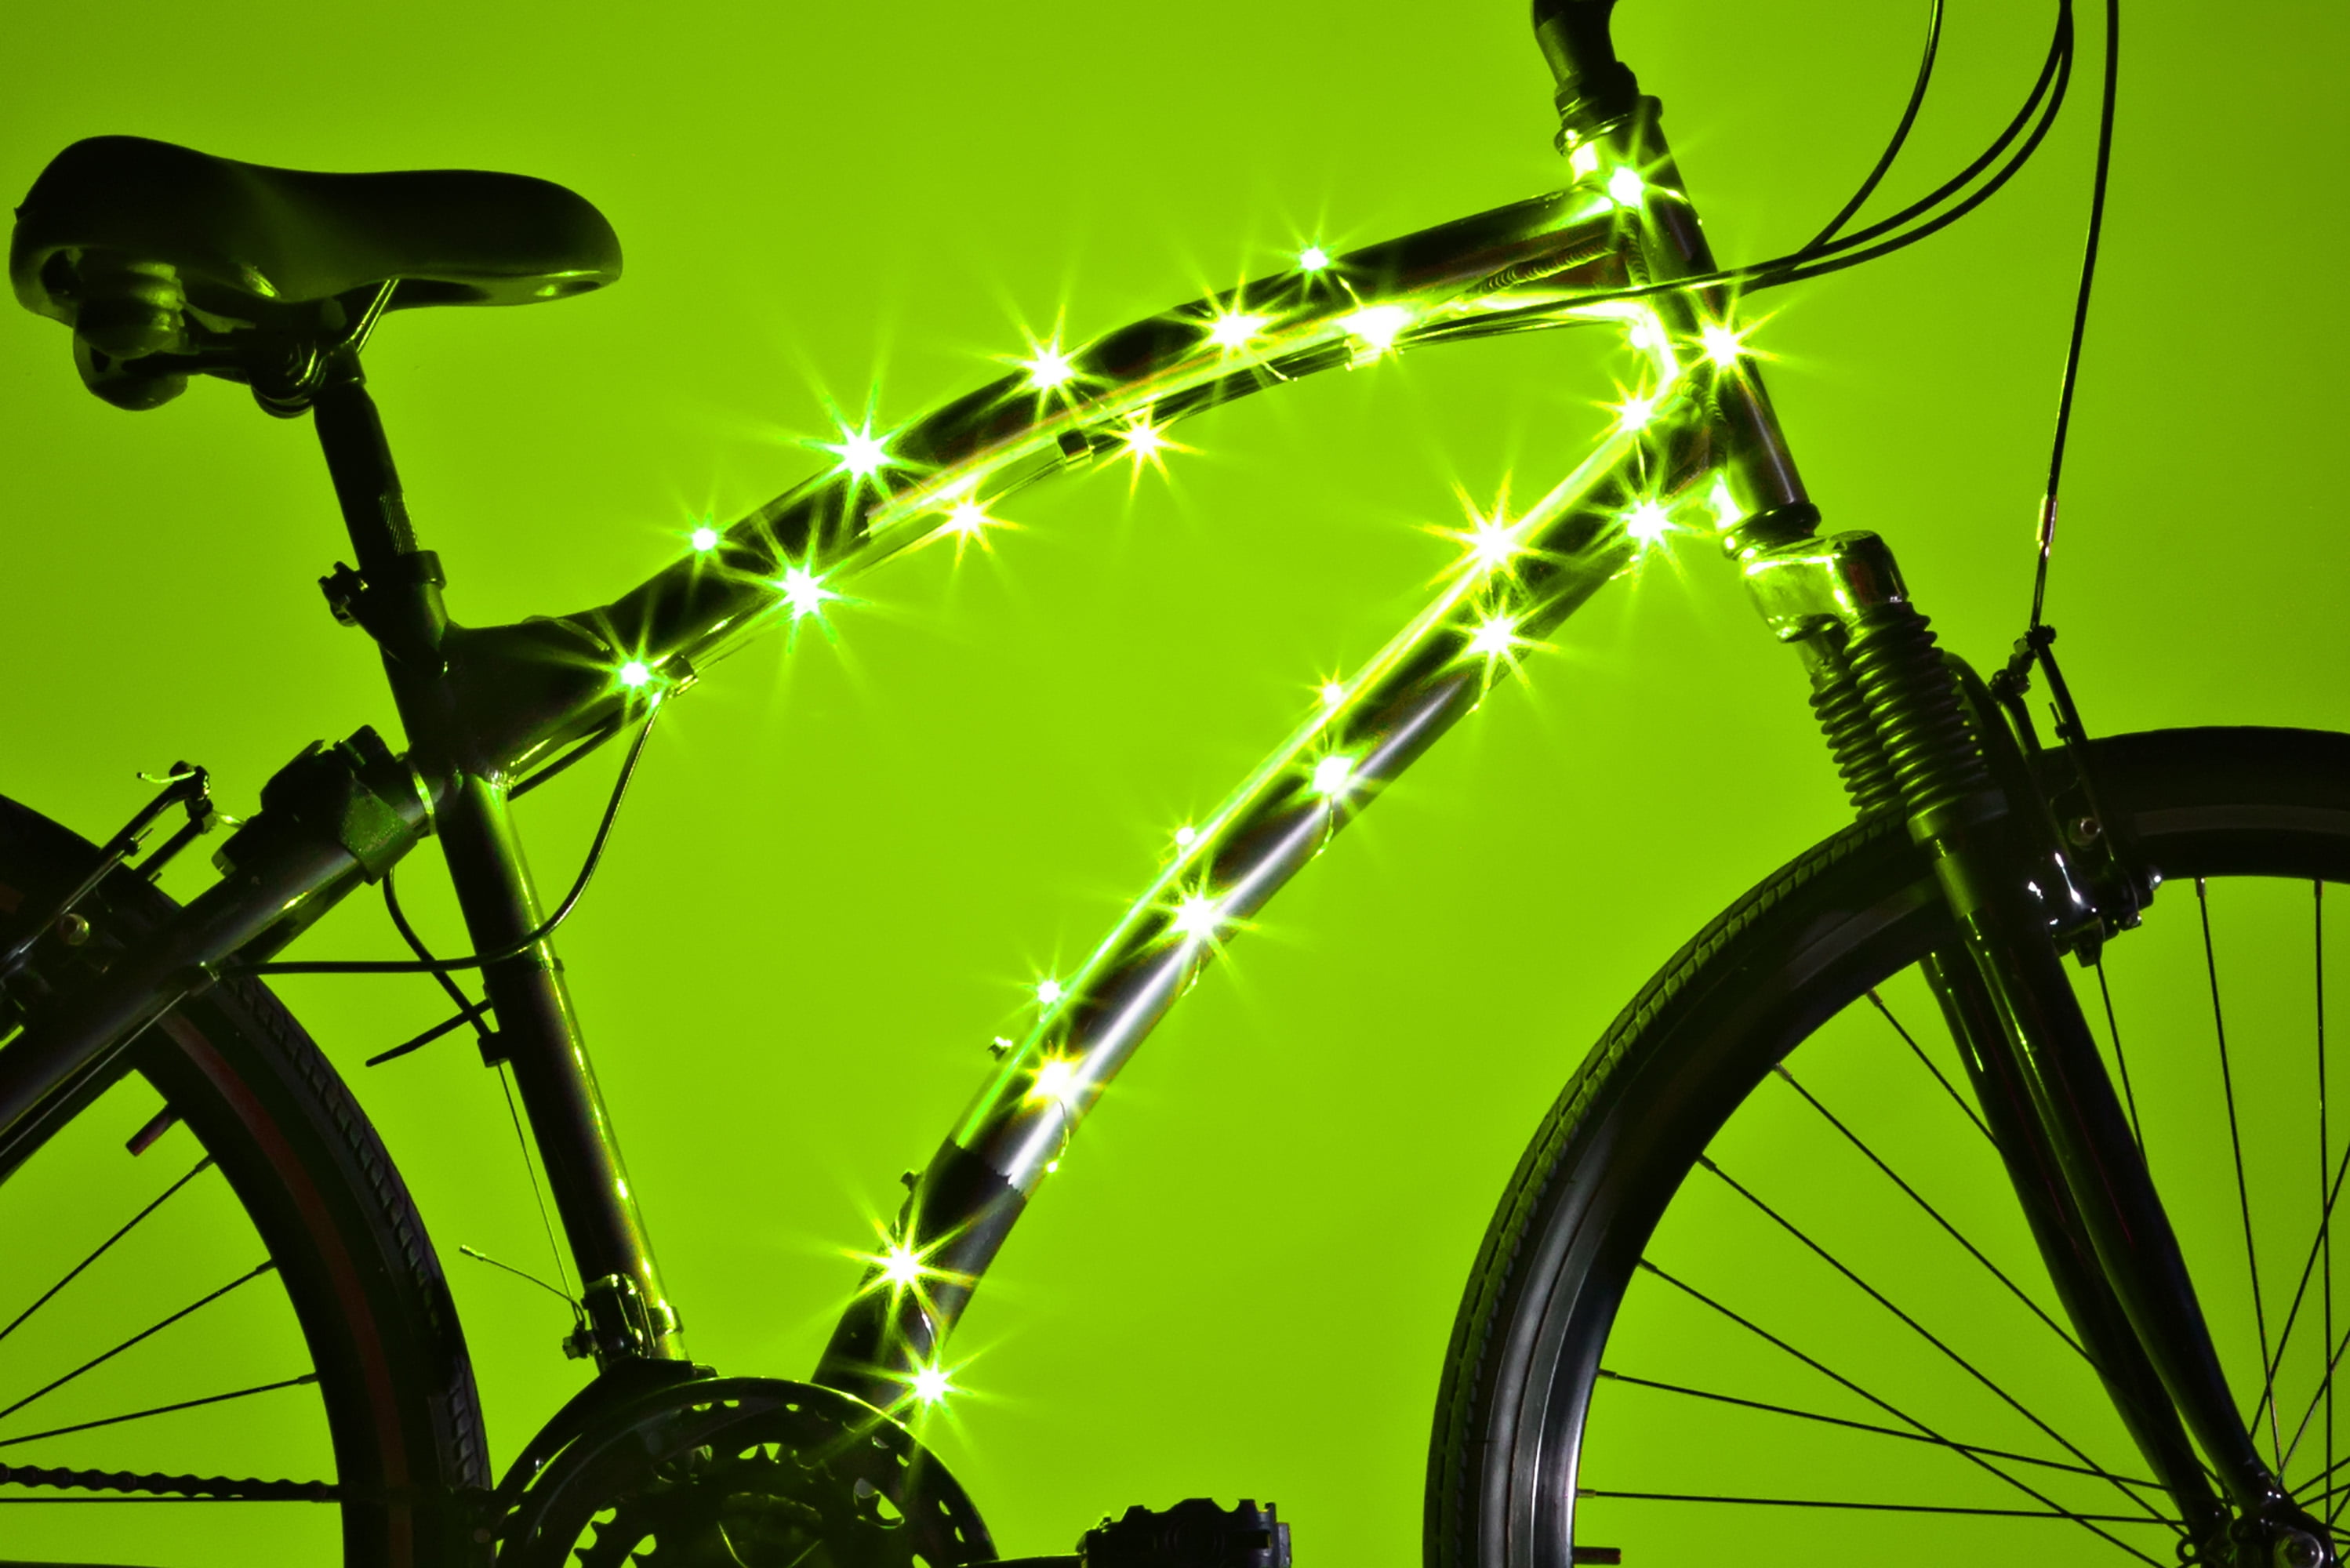 Brightz LED Bicycle Light Cosmic Brightz Green - Walmart.com - Walmart.com